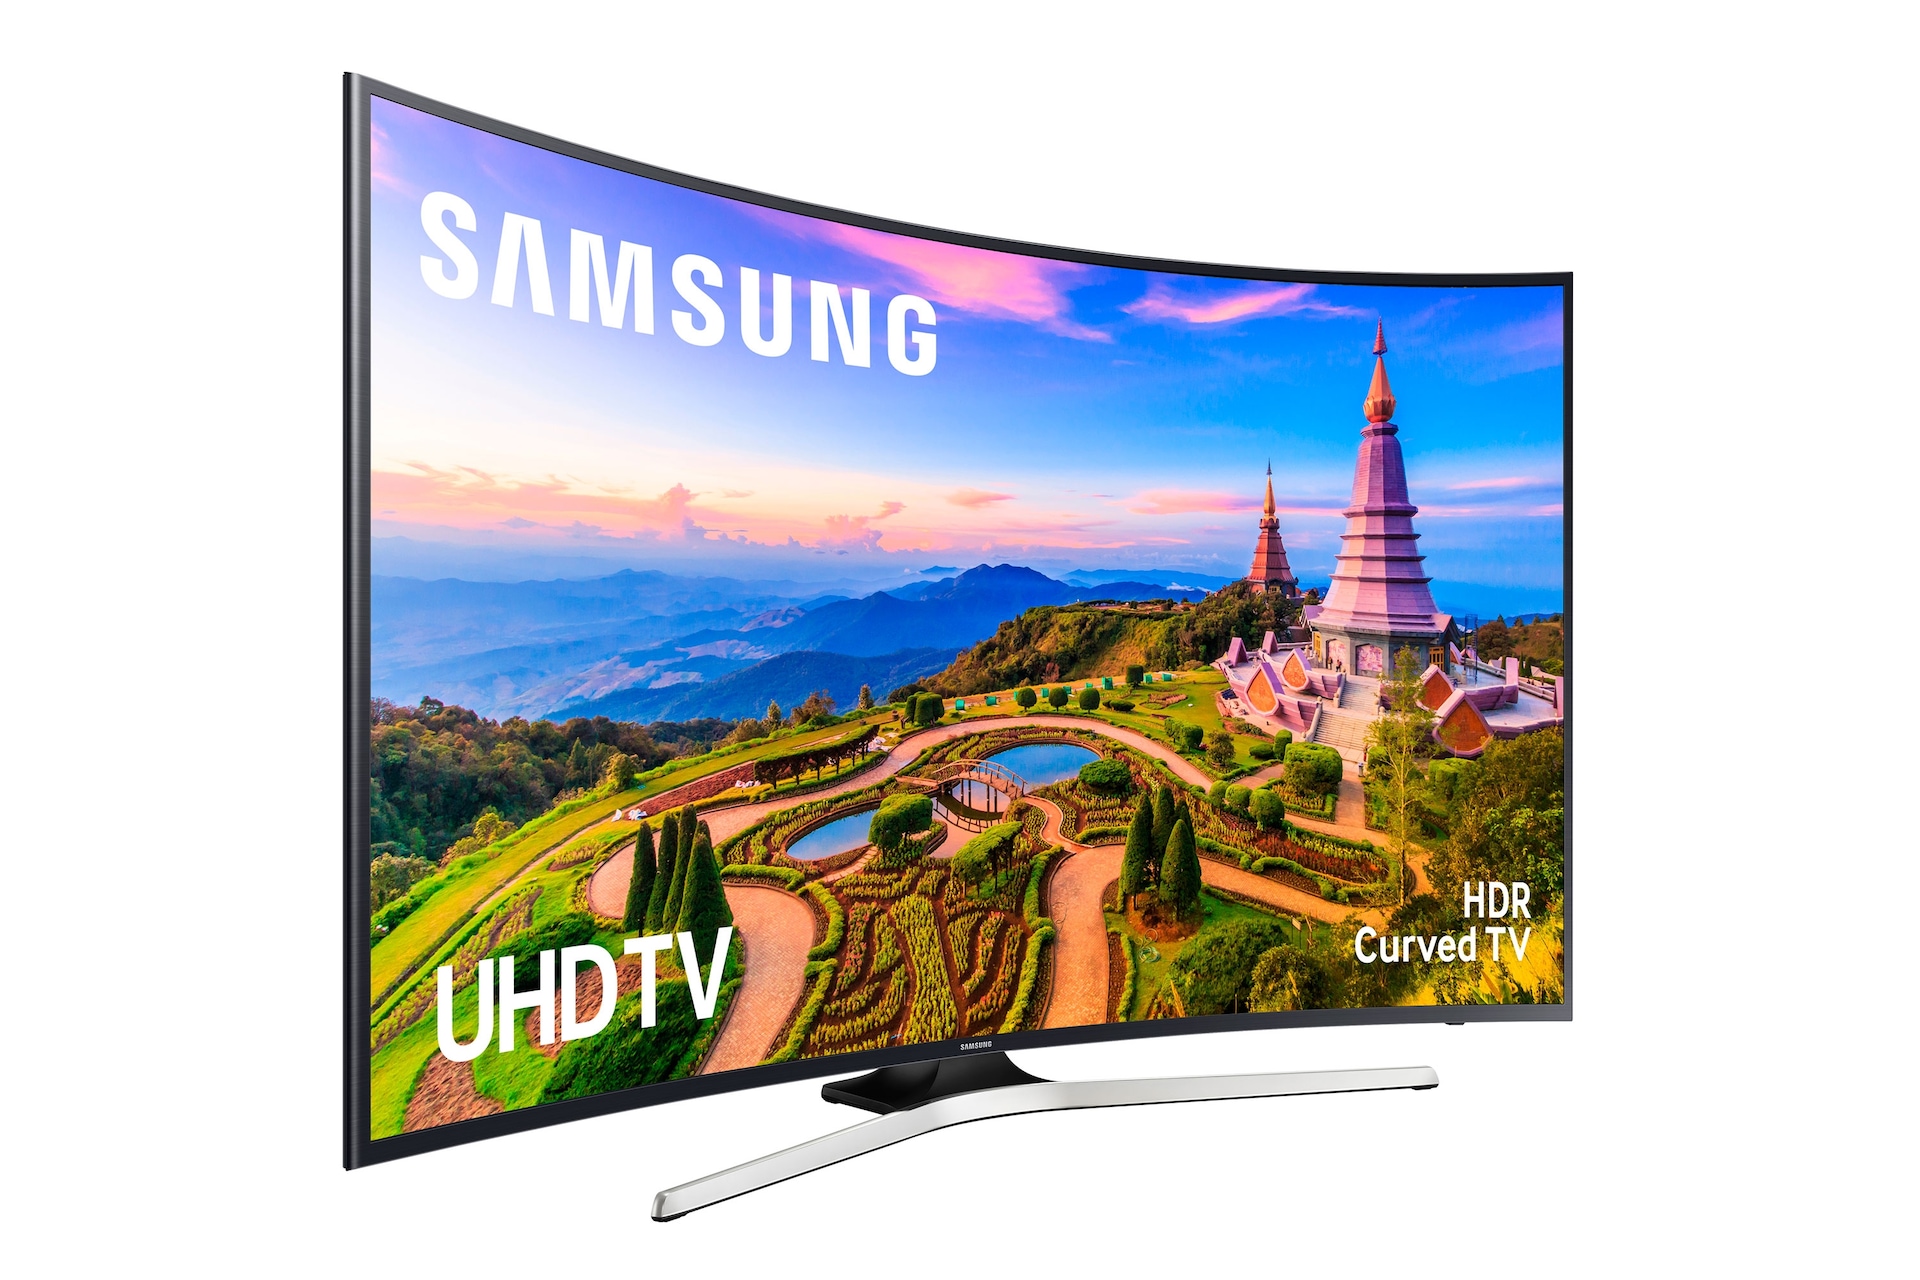 Led Smart Tv 55 Curvo 4k Uhd Samsung (un55mu6300g) - Hiperaudio y TV